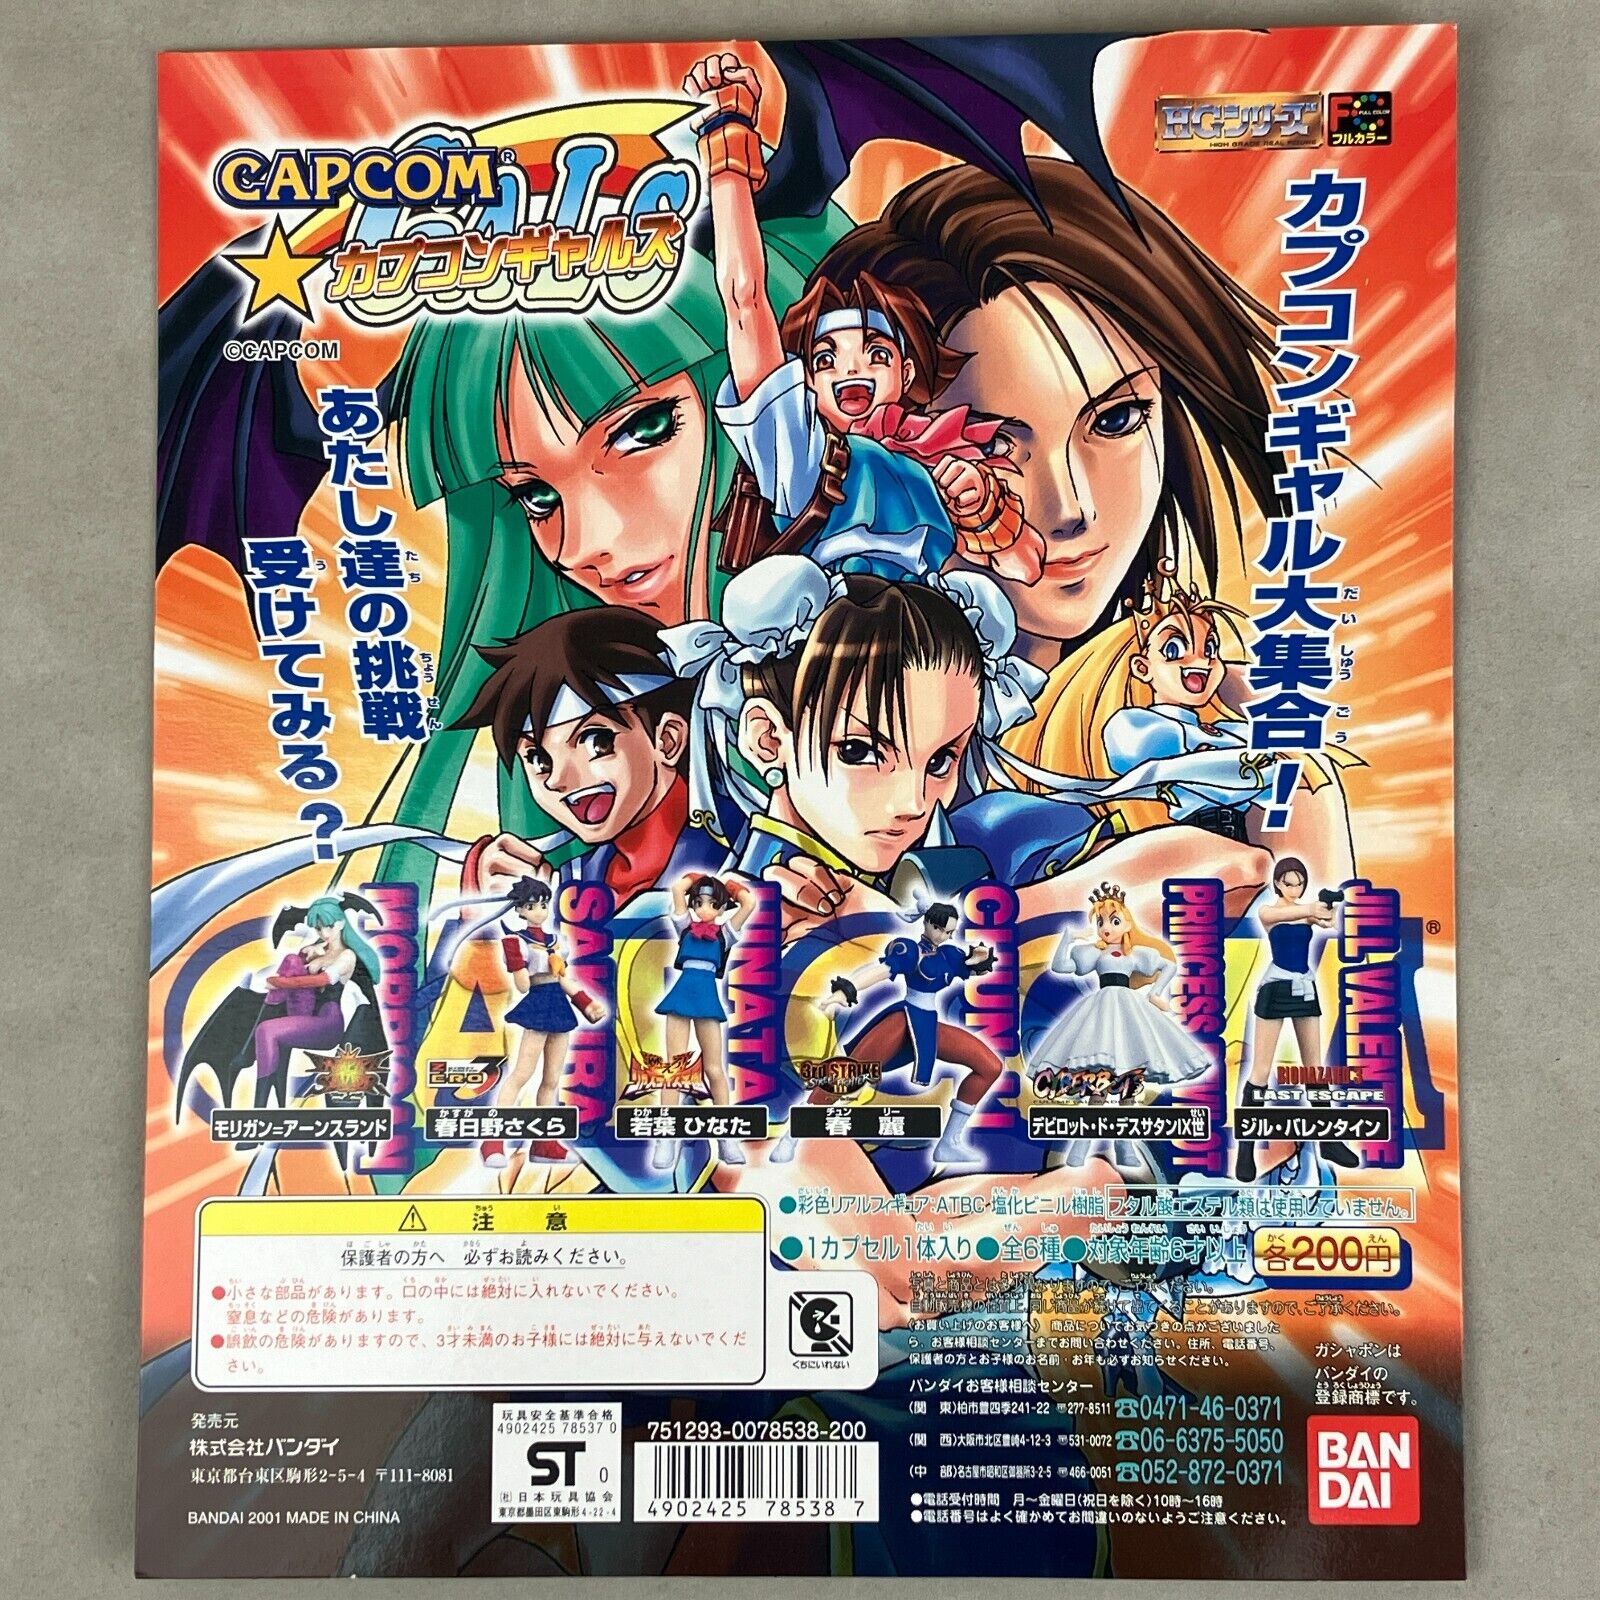 Bandai Capcom Gals HG Street Fighter Gashapon Figure Store Mount Poster Japan